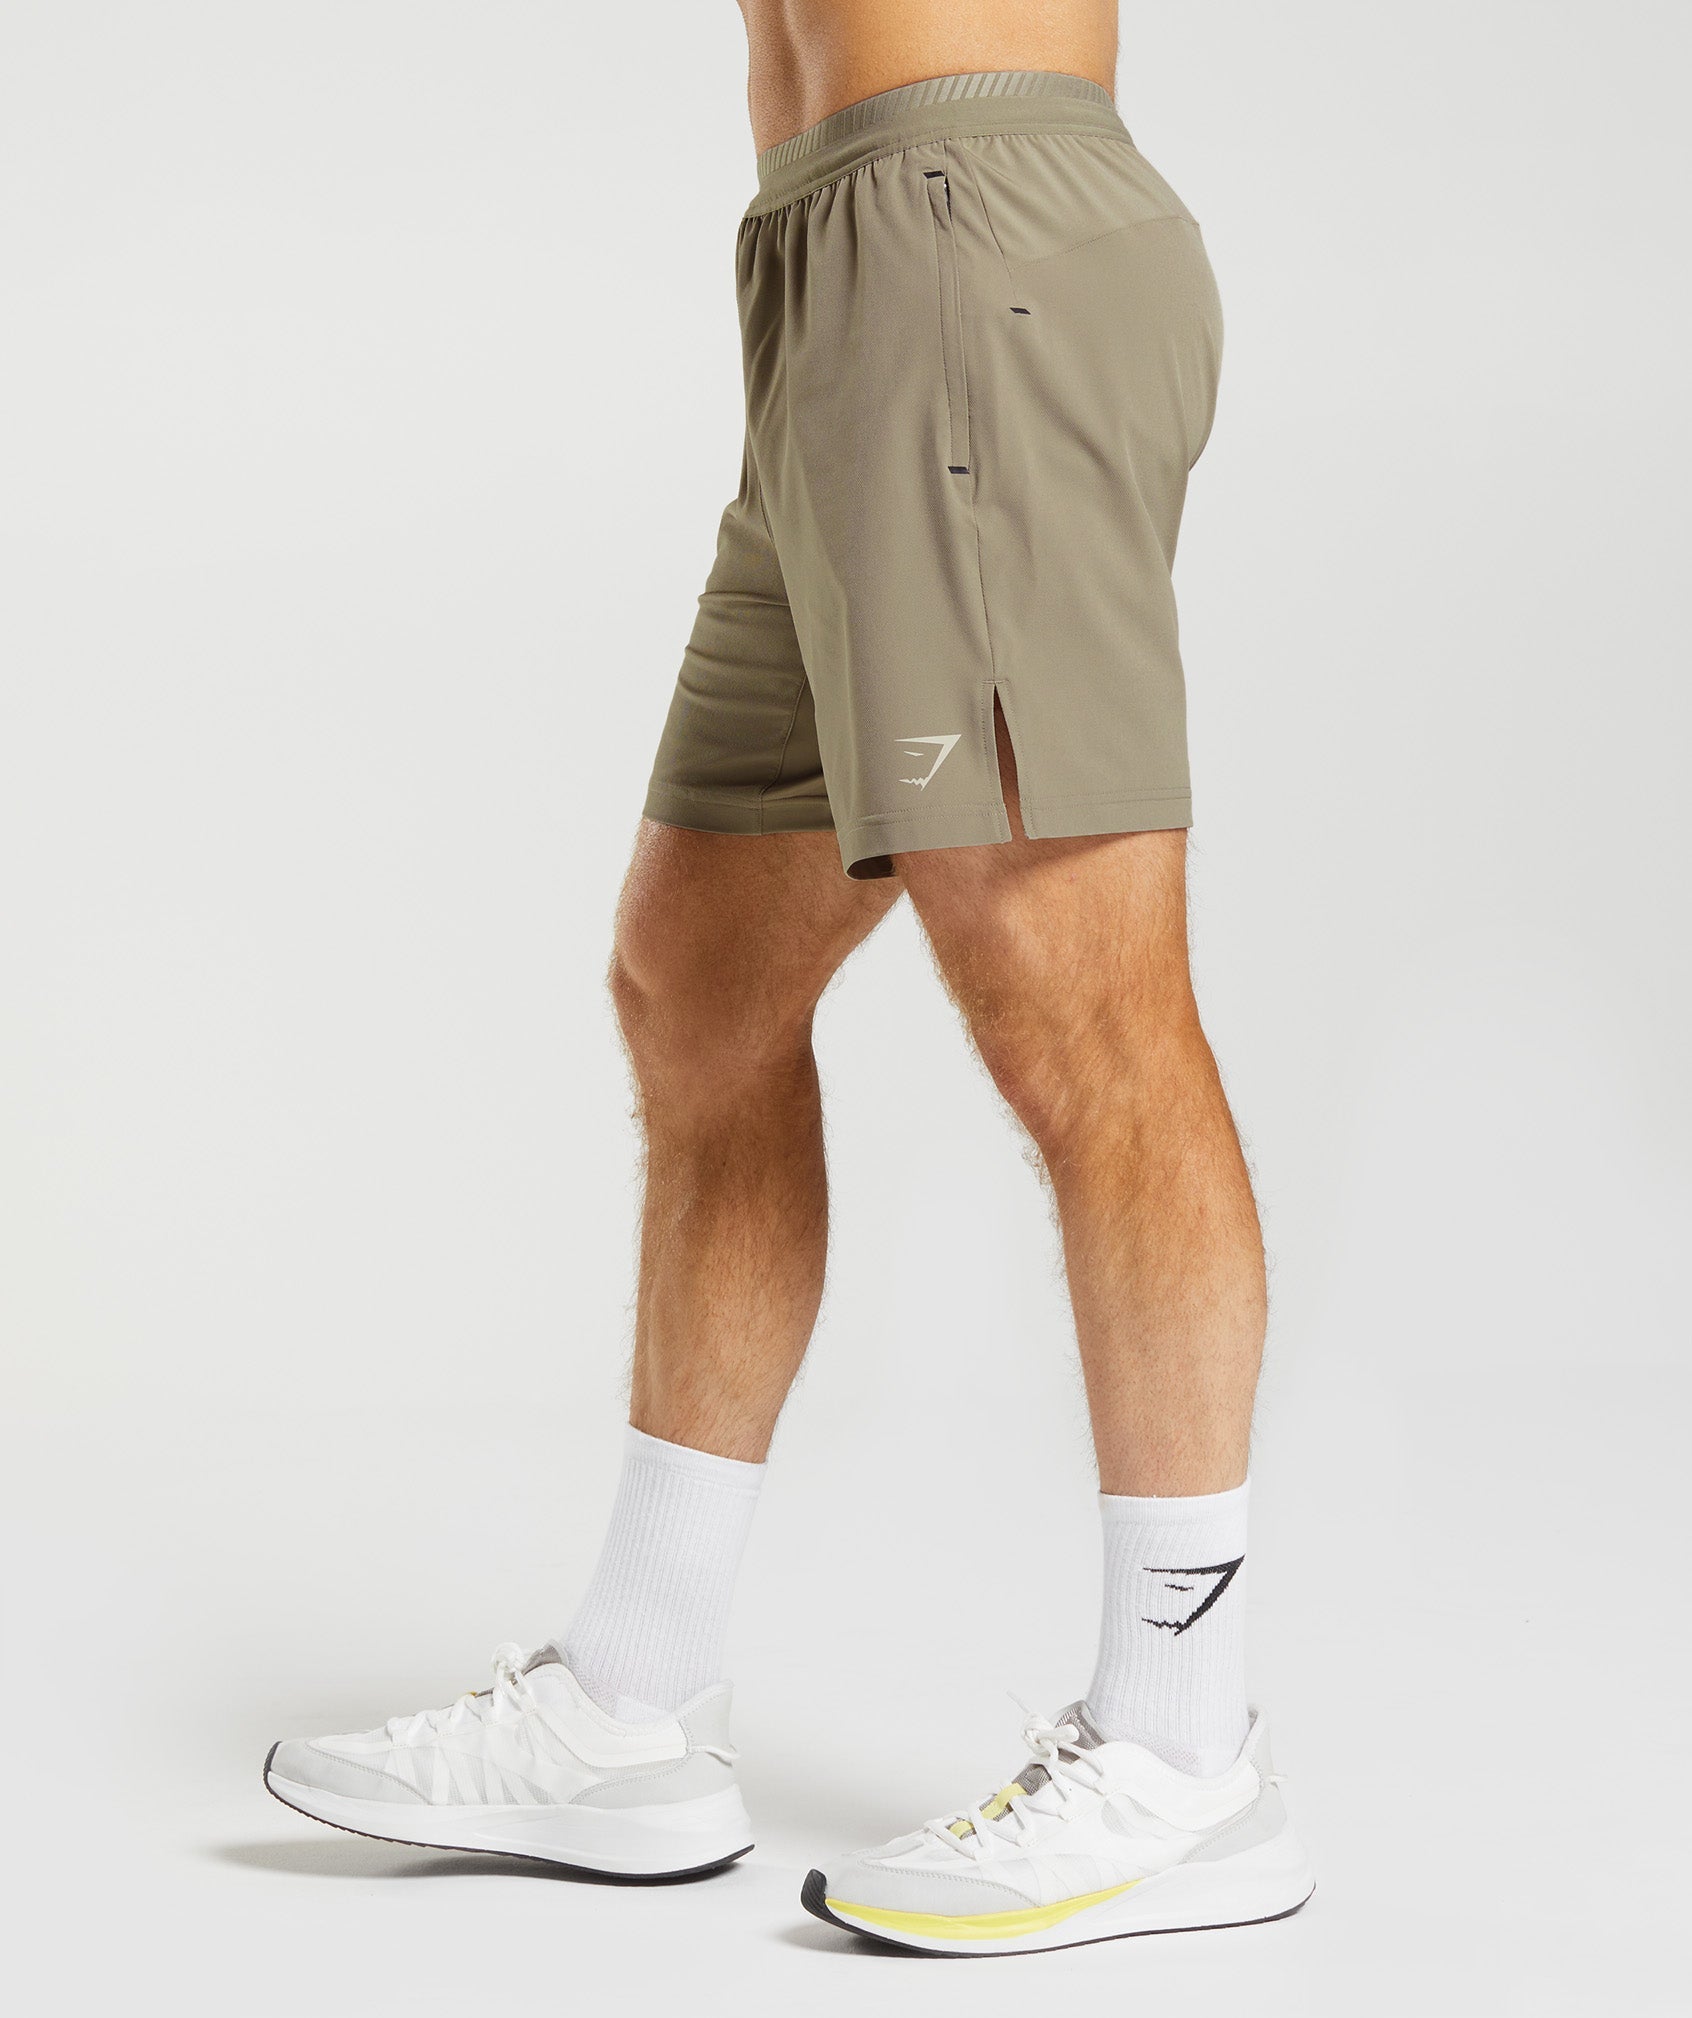 Apex 7" Hybrid Shorts in Earthy Brown